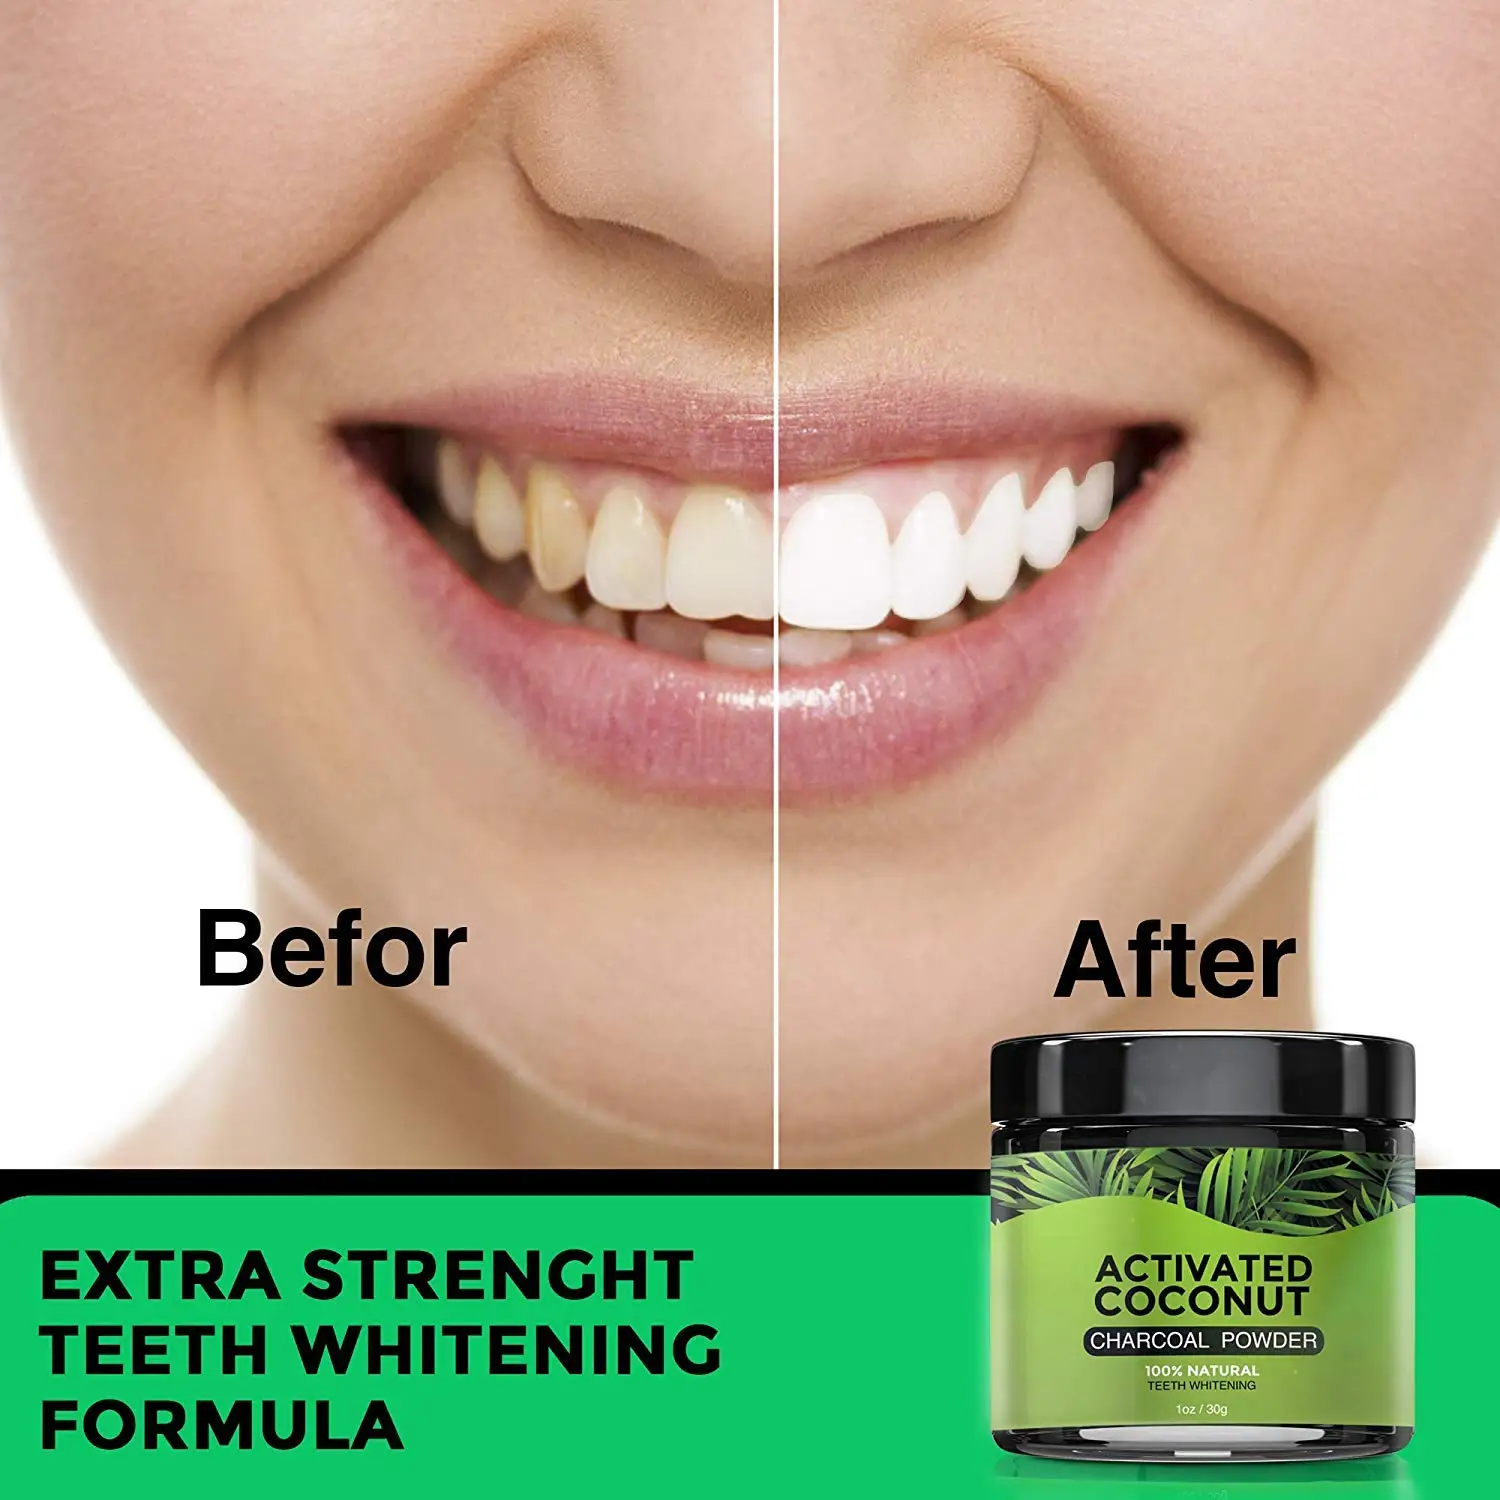 Instant teeth whitening strips